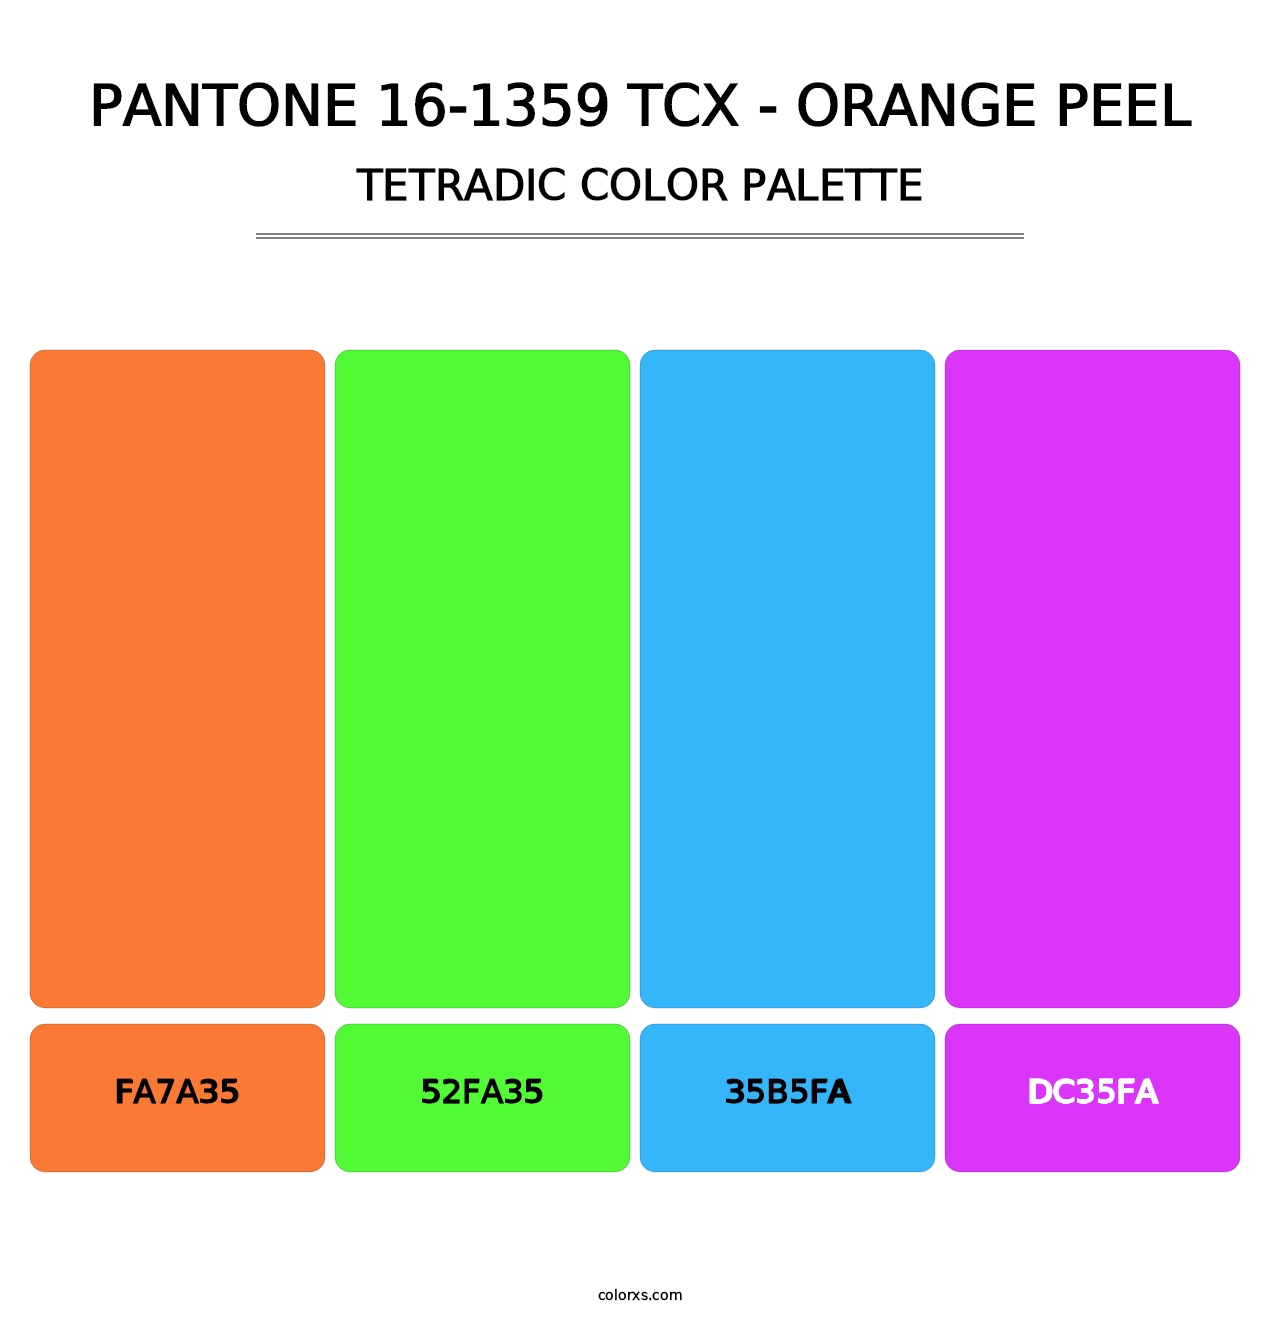 PANTONE 16-1359 TCX - Orange Peel - Tetradic Color Palette